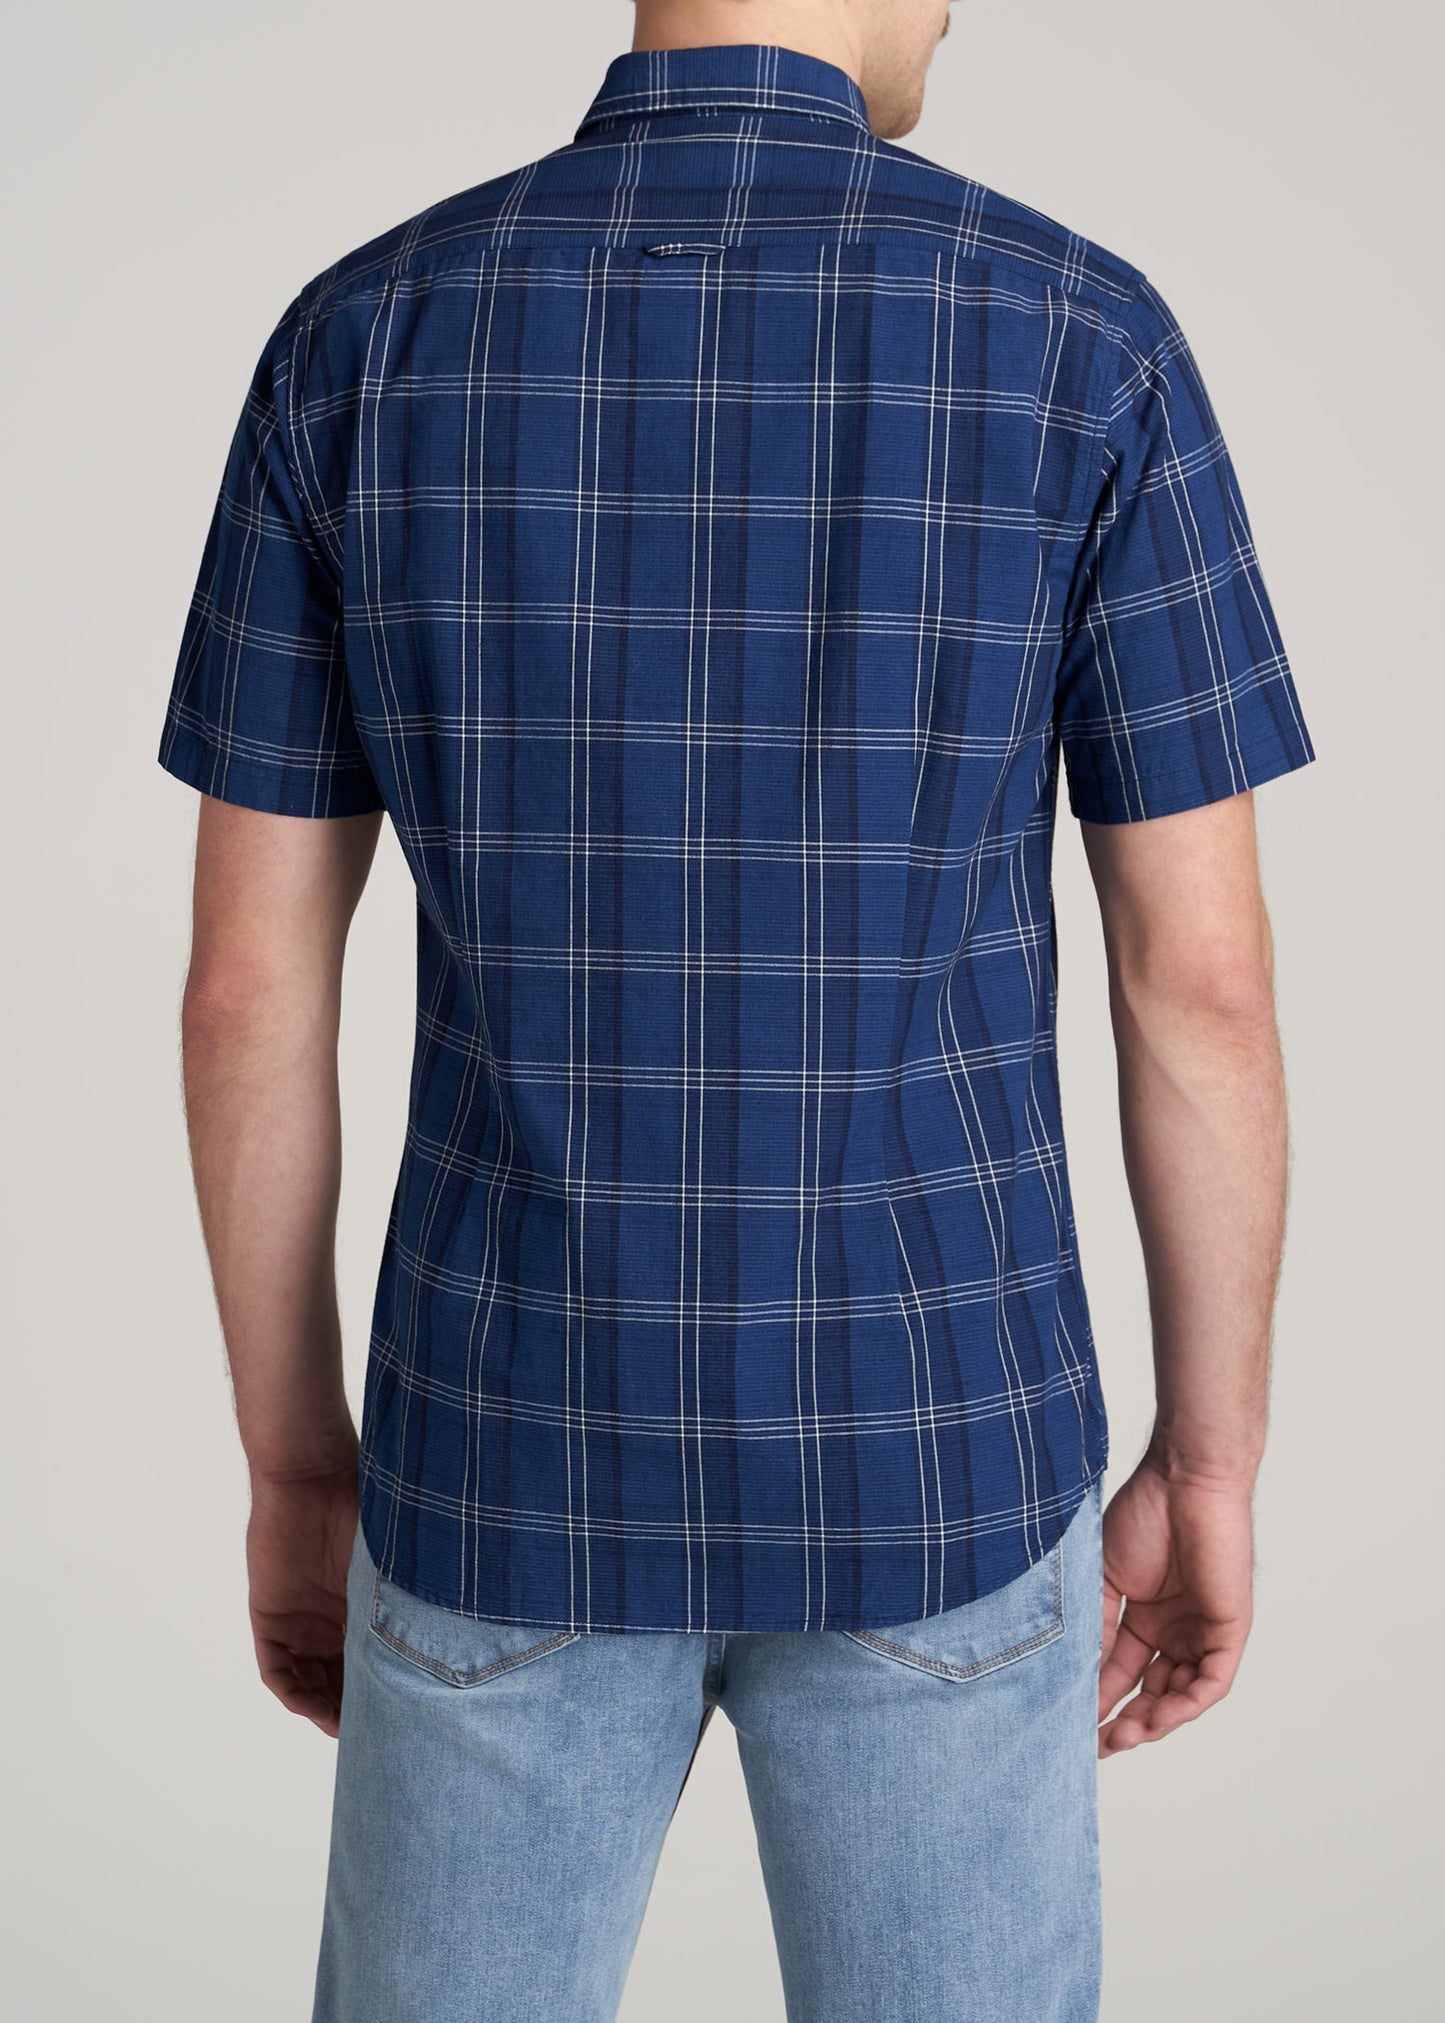 Short Sleeve Shirt For Tall Men Bold Navy & Indigo Plaid – American Tall